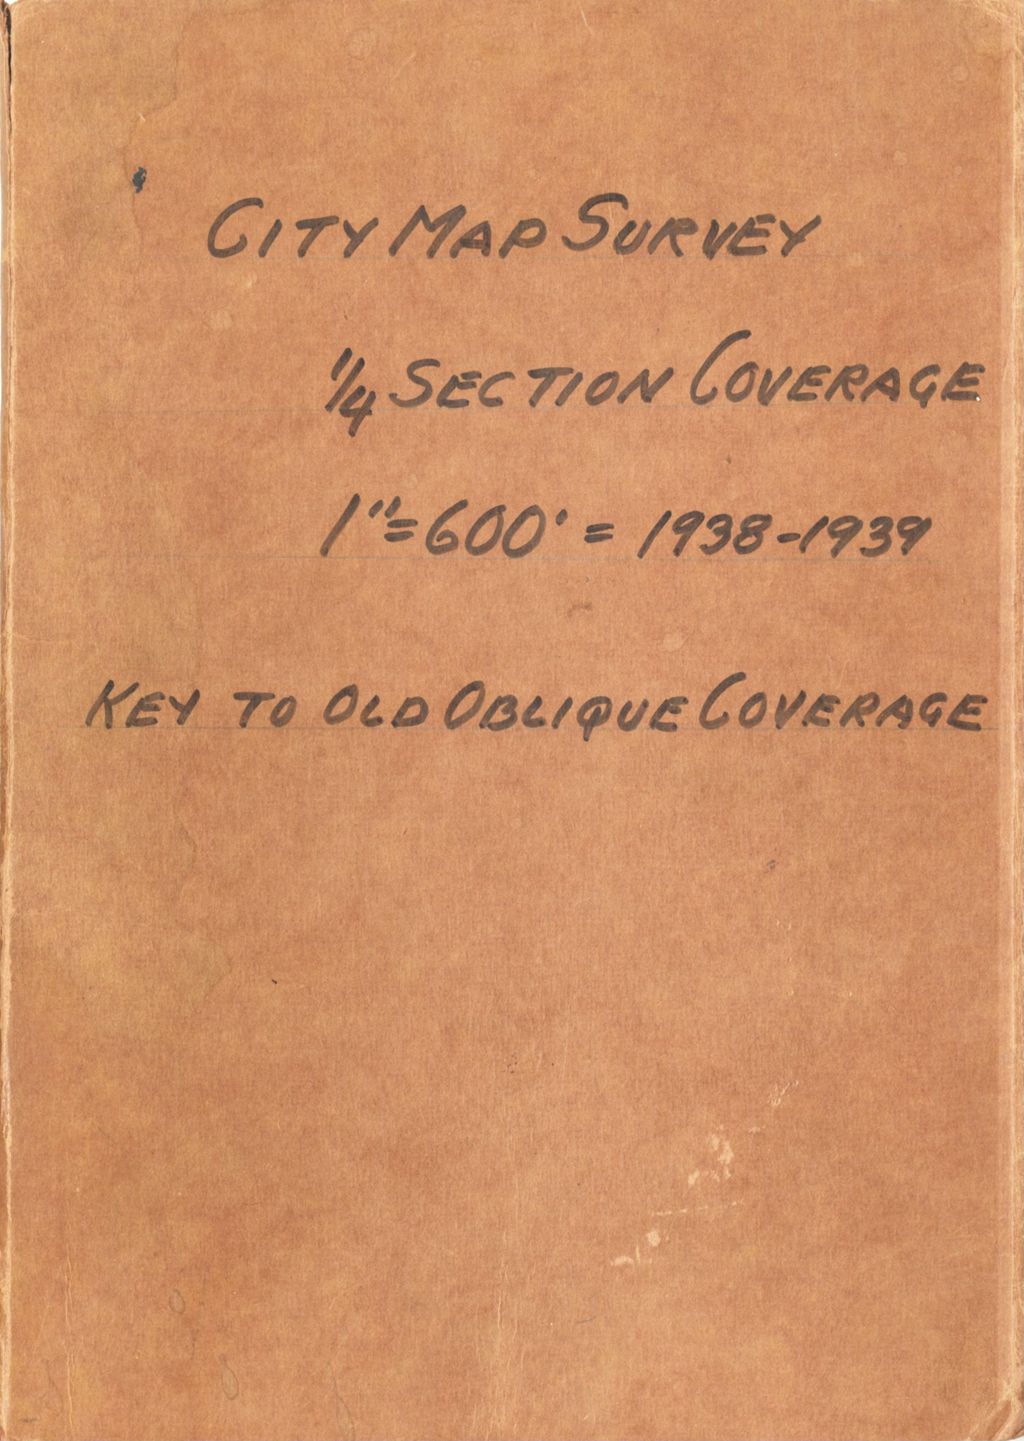 Miniature of City map survey, key to old oblique coverage, copy 1